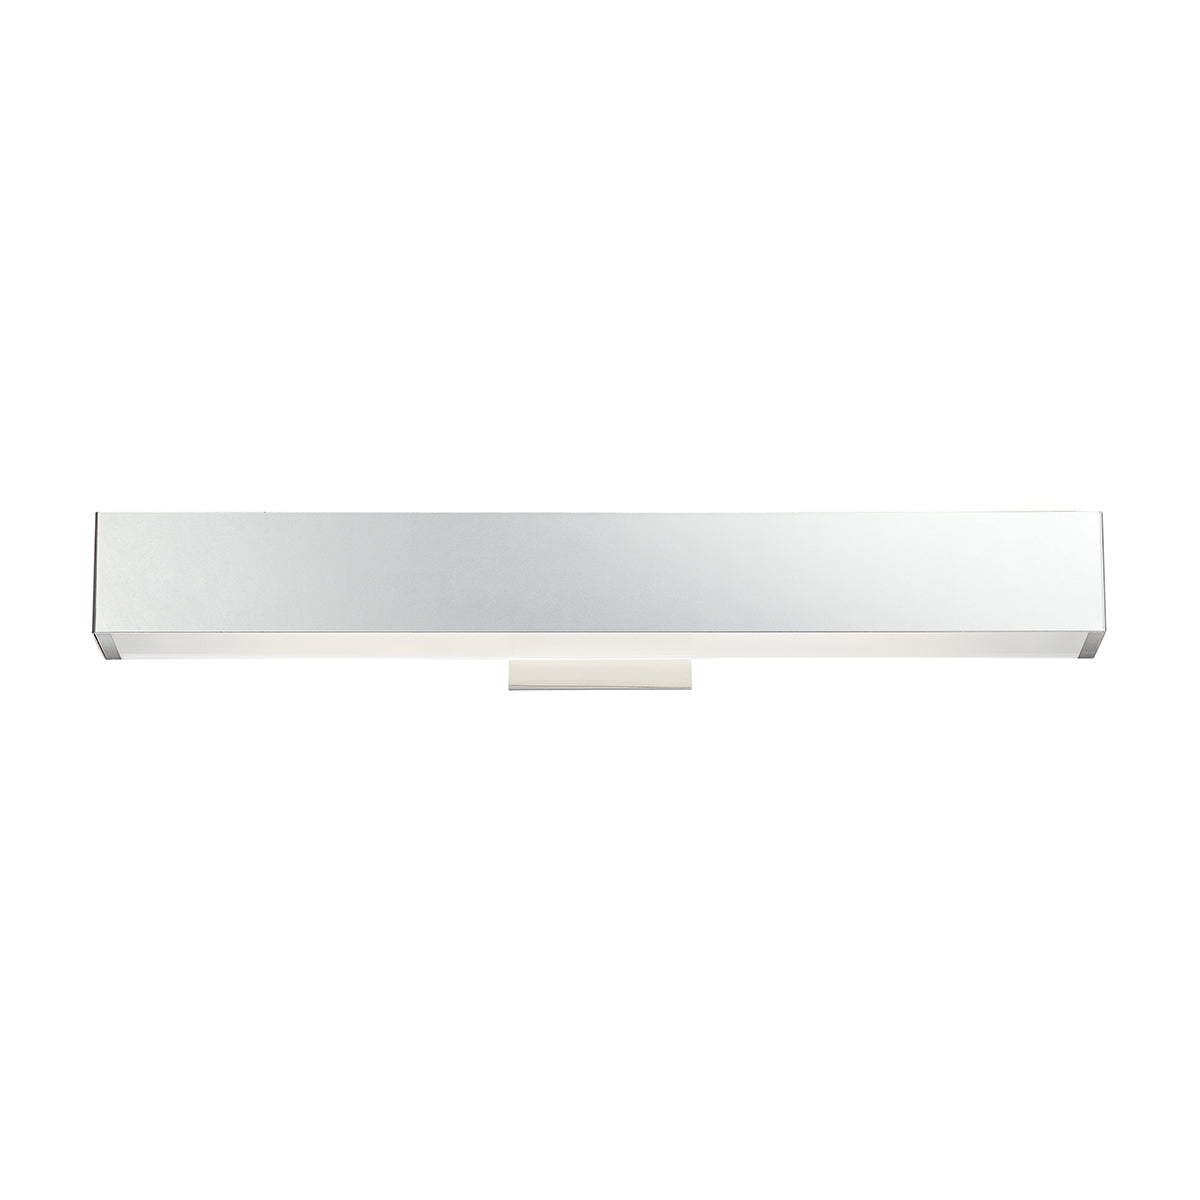 ANELLO Bathroom sconce Chrome - 32122-015 INTEGRATED LED | EUROFASE